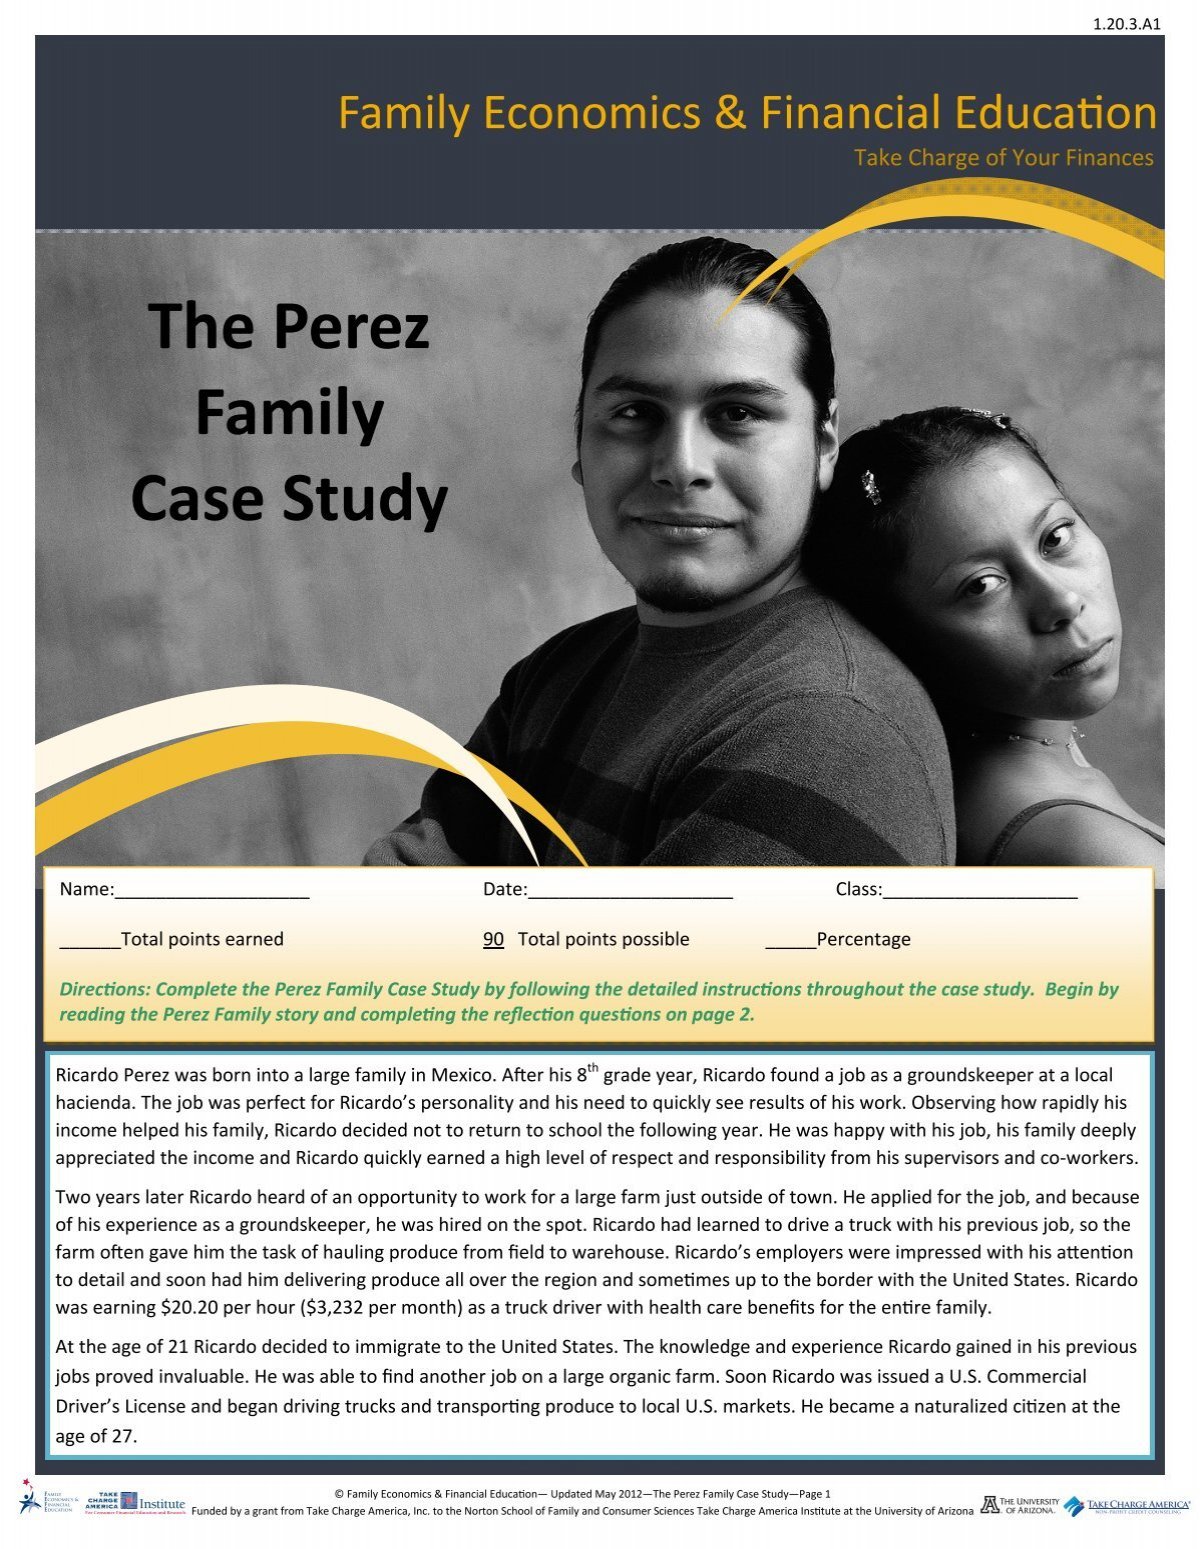 the perez family case study quizlet